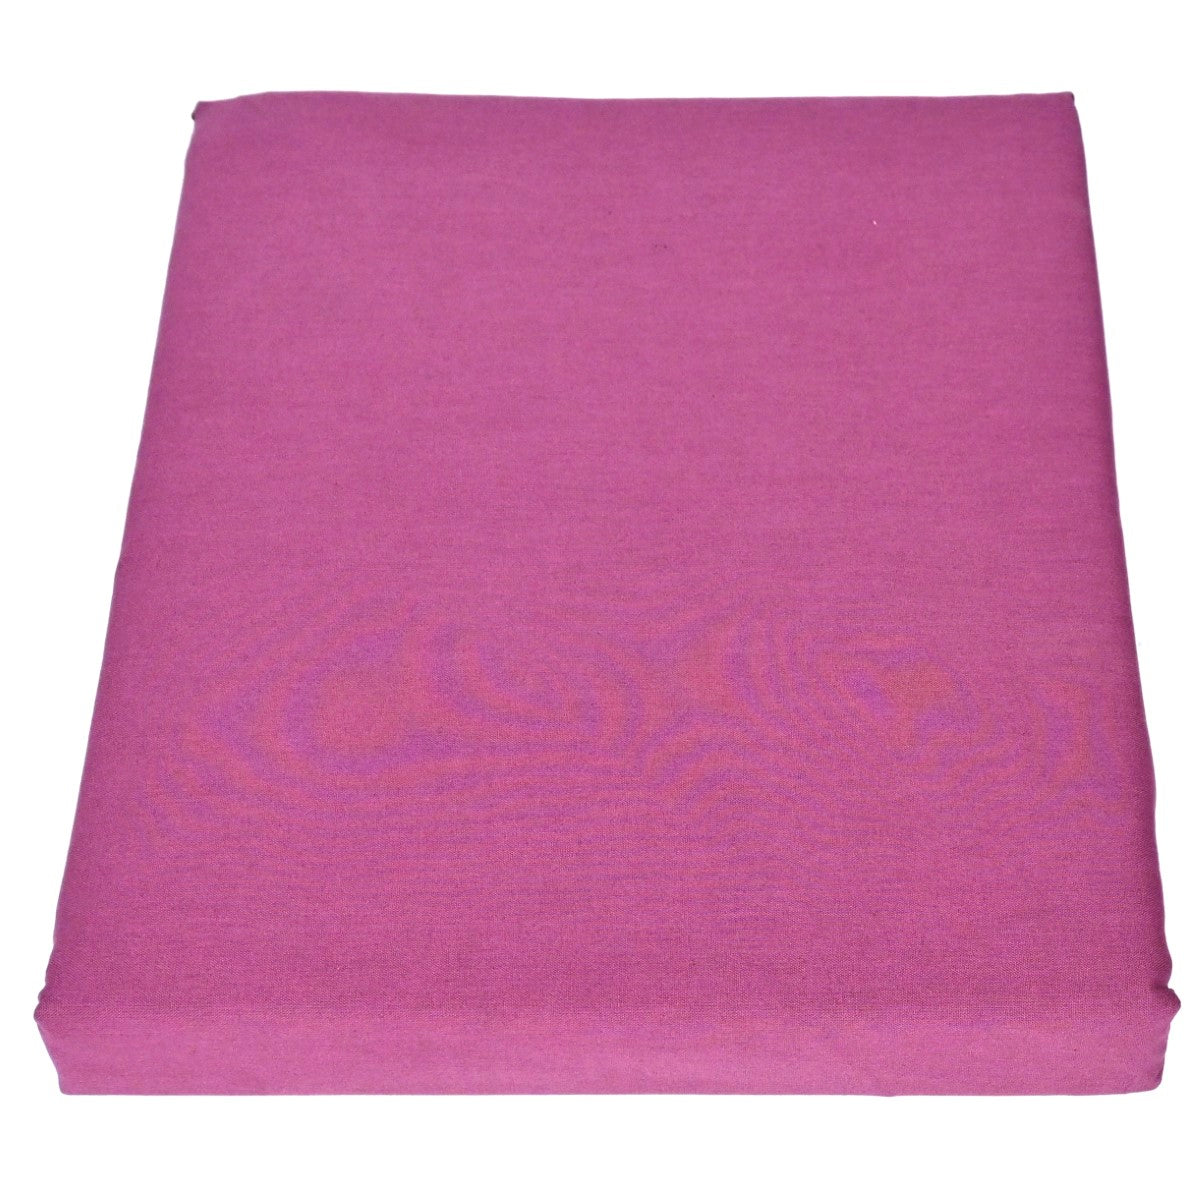 Dyed Pink Single Bed Sheet 68x96"